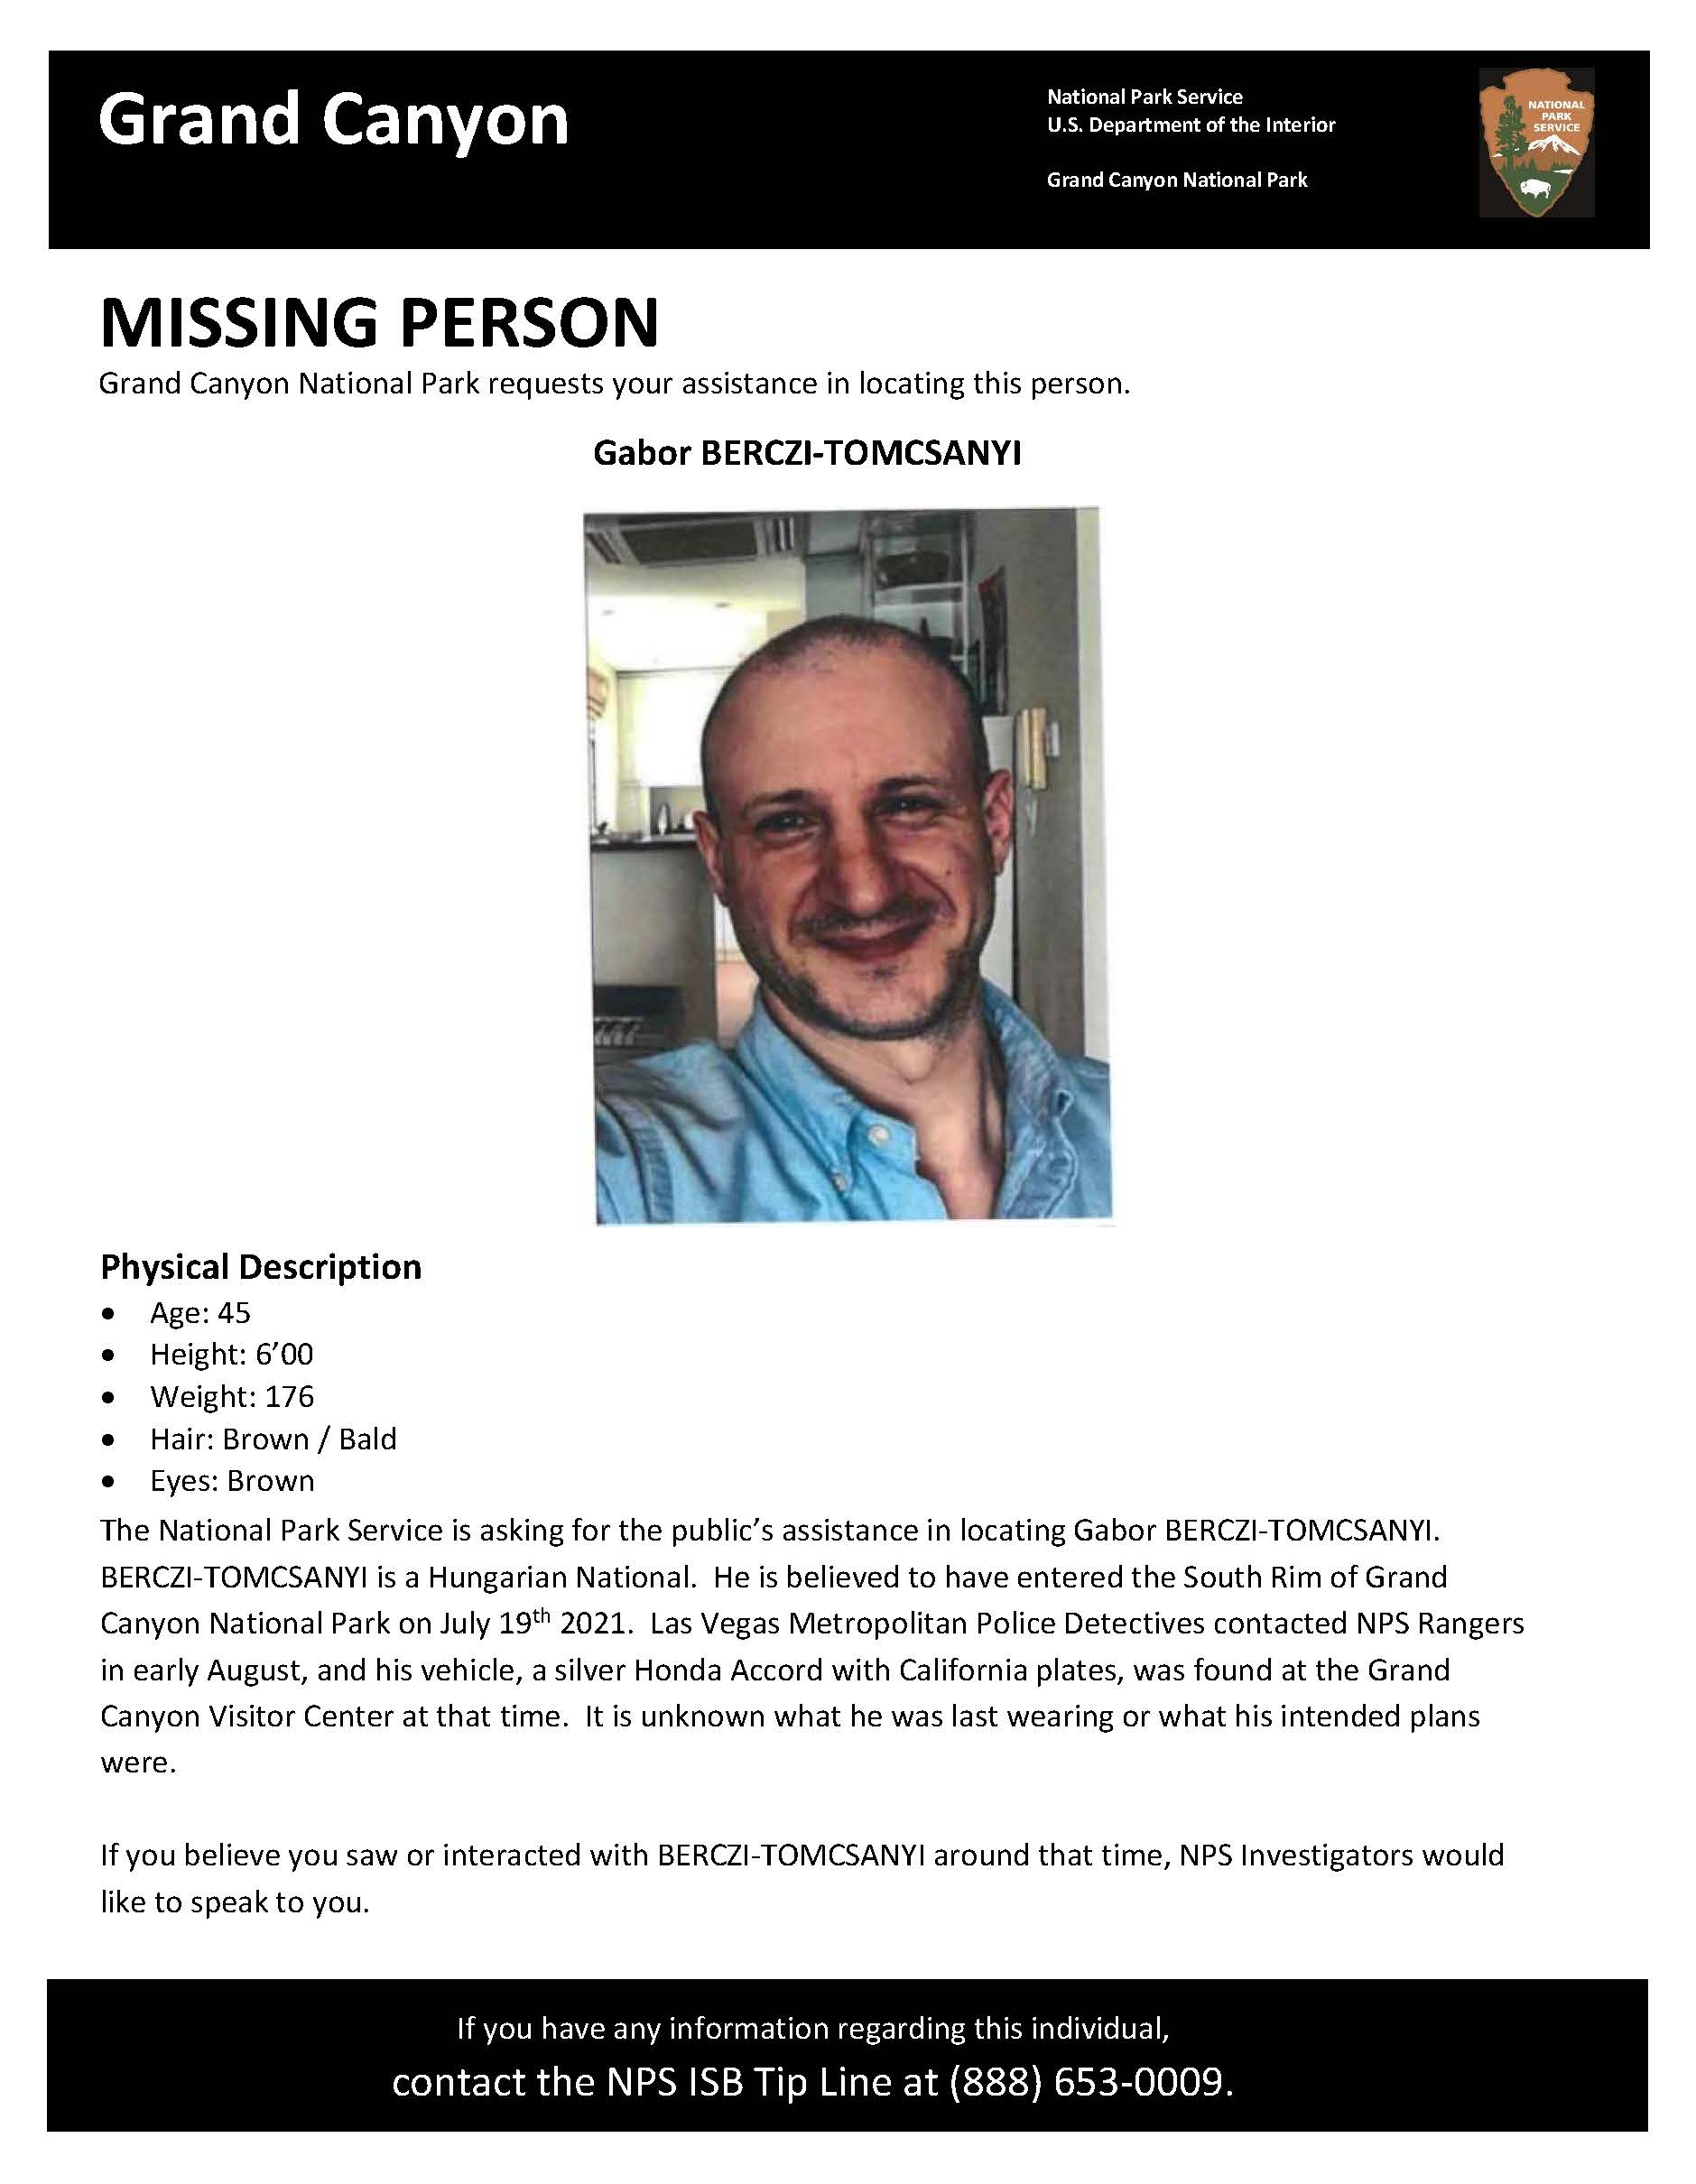 Missing Person Flyer describing Berczi-Tomcsanyi